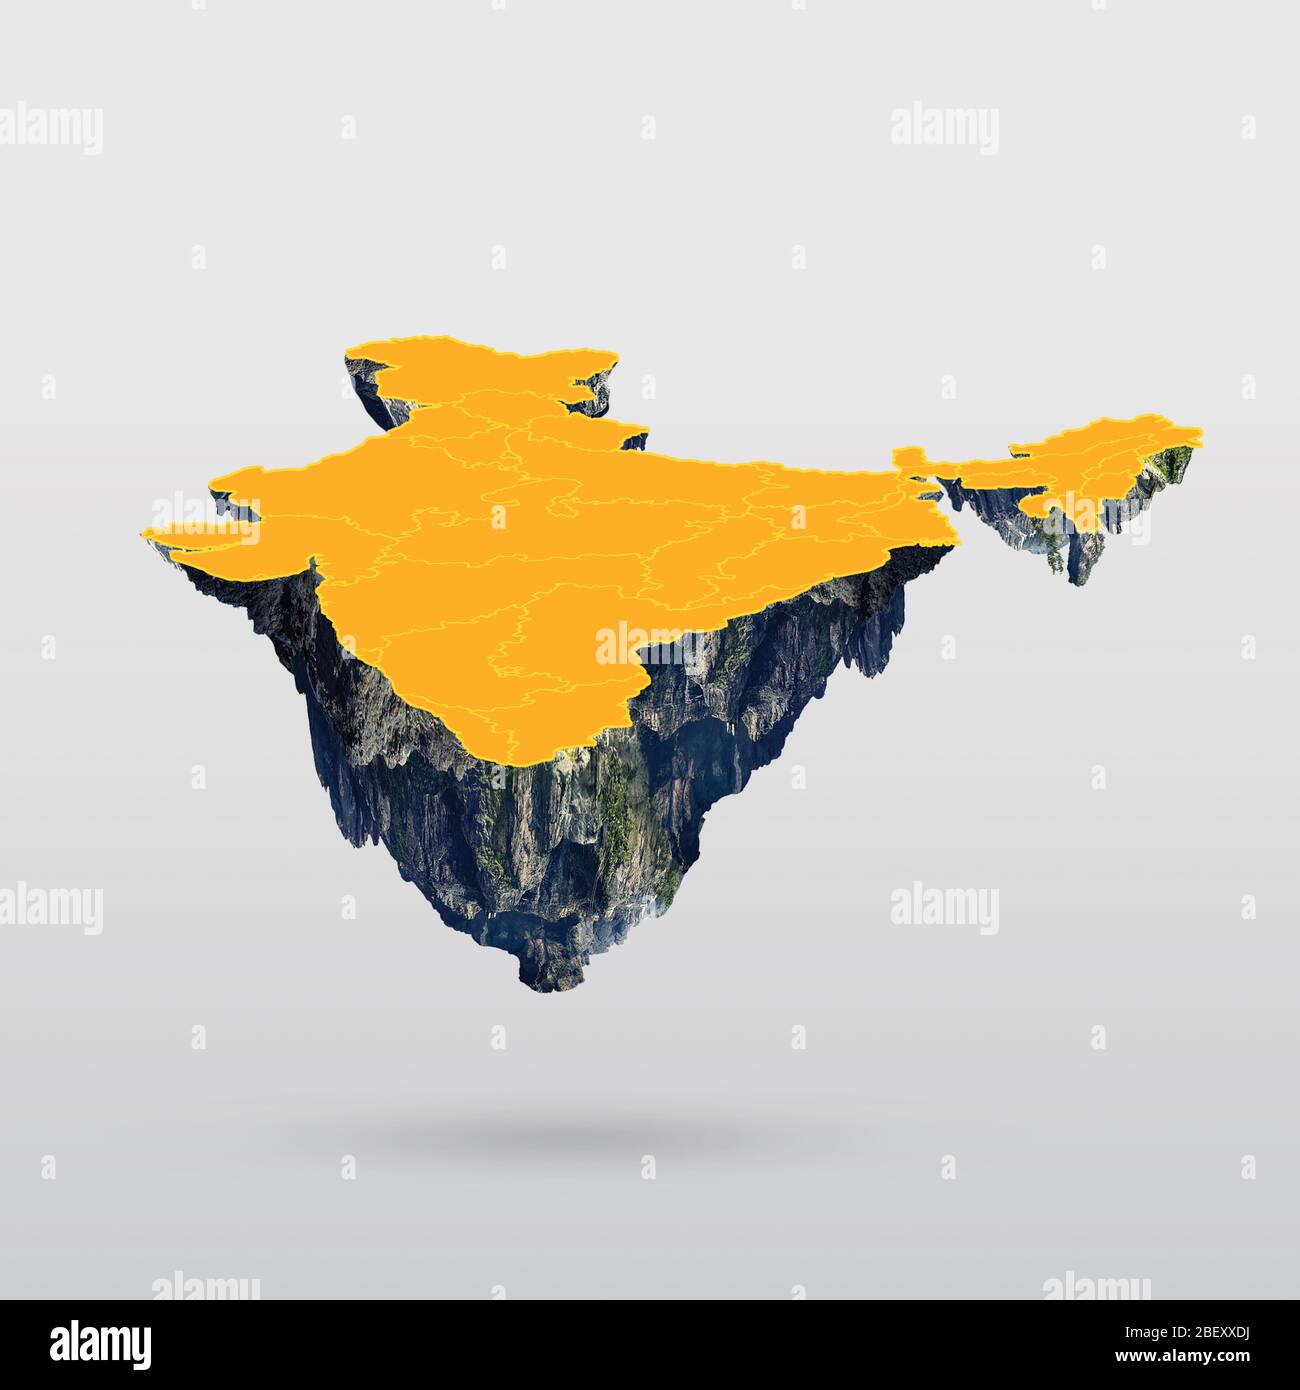 Mapa de la isla flotante de la India aislado sobre el fondo blanco Foto de stock